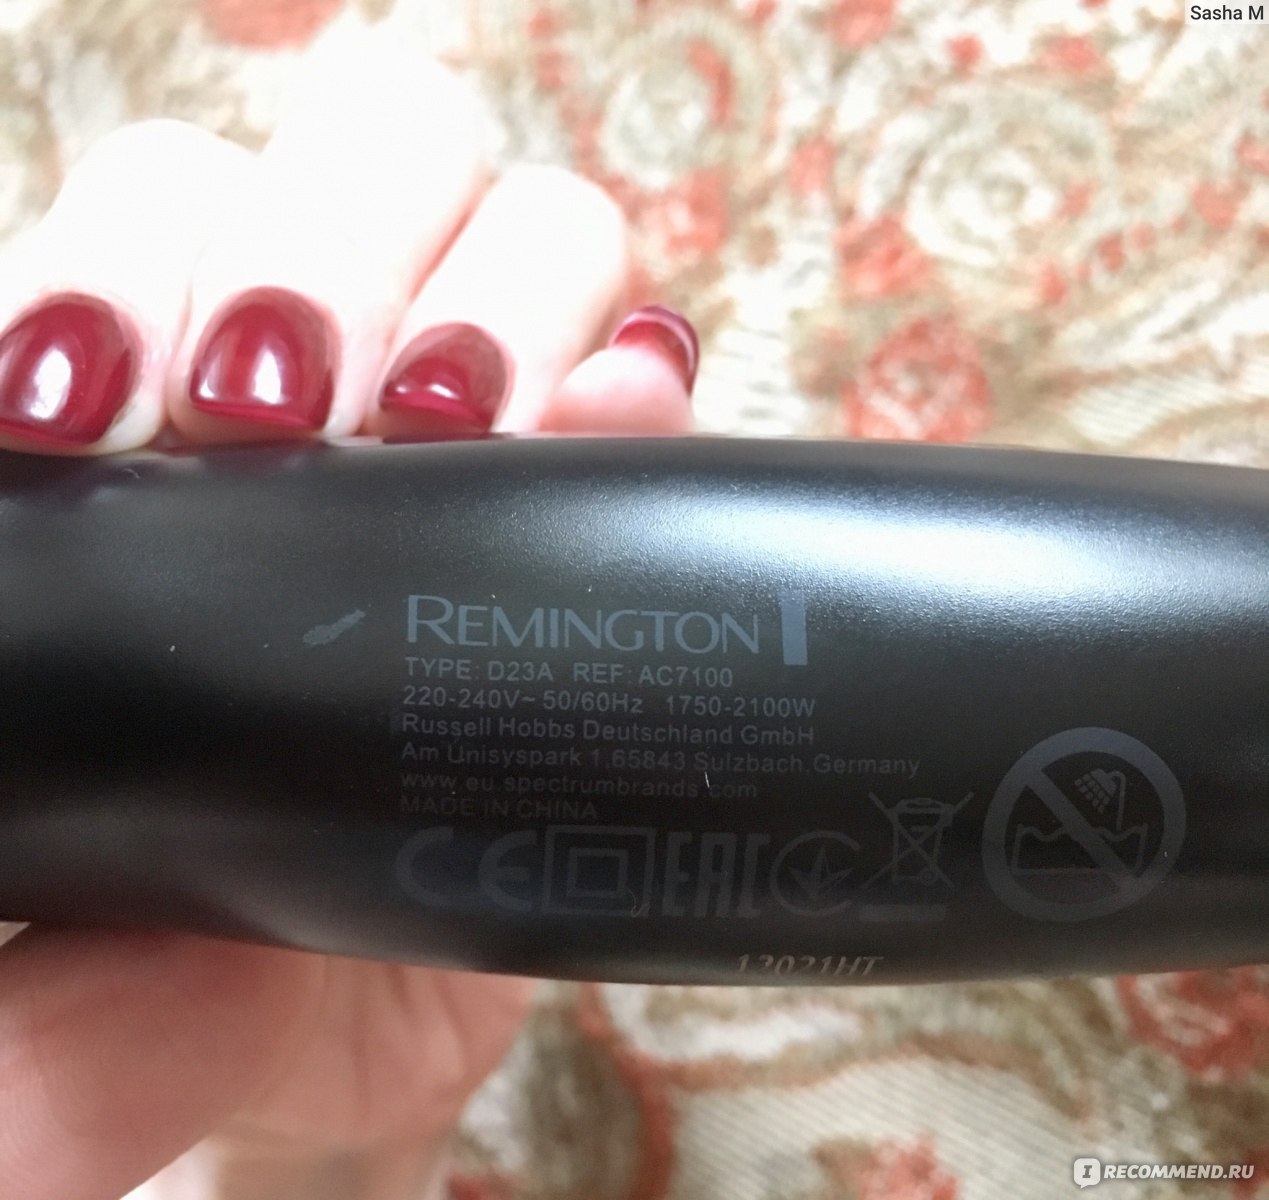 Фен Remington AC7100 Supercare PRO 2100 отзывы